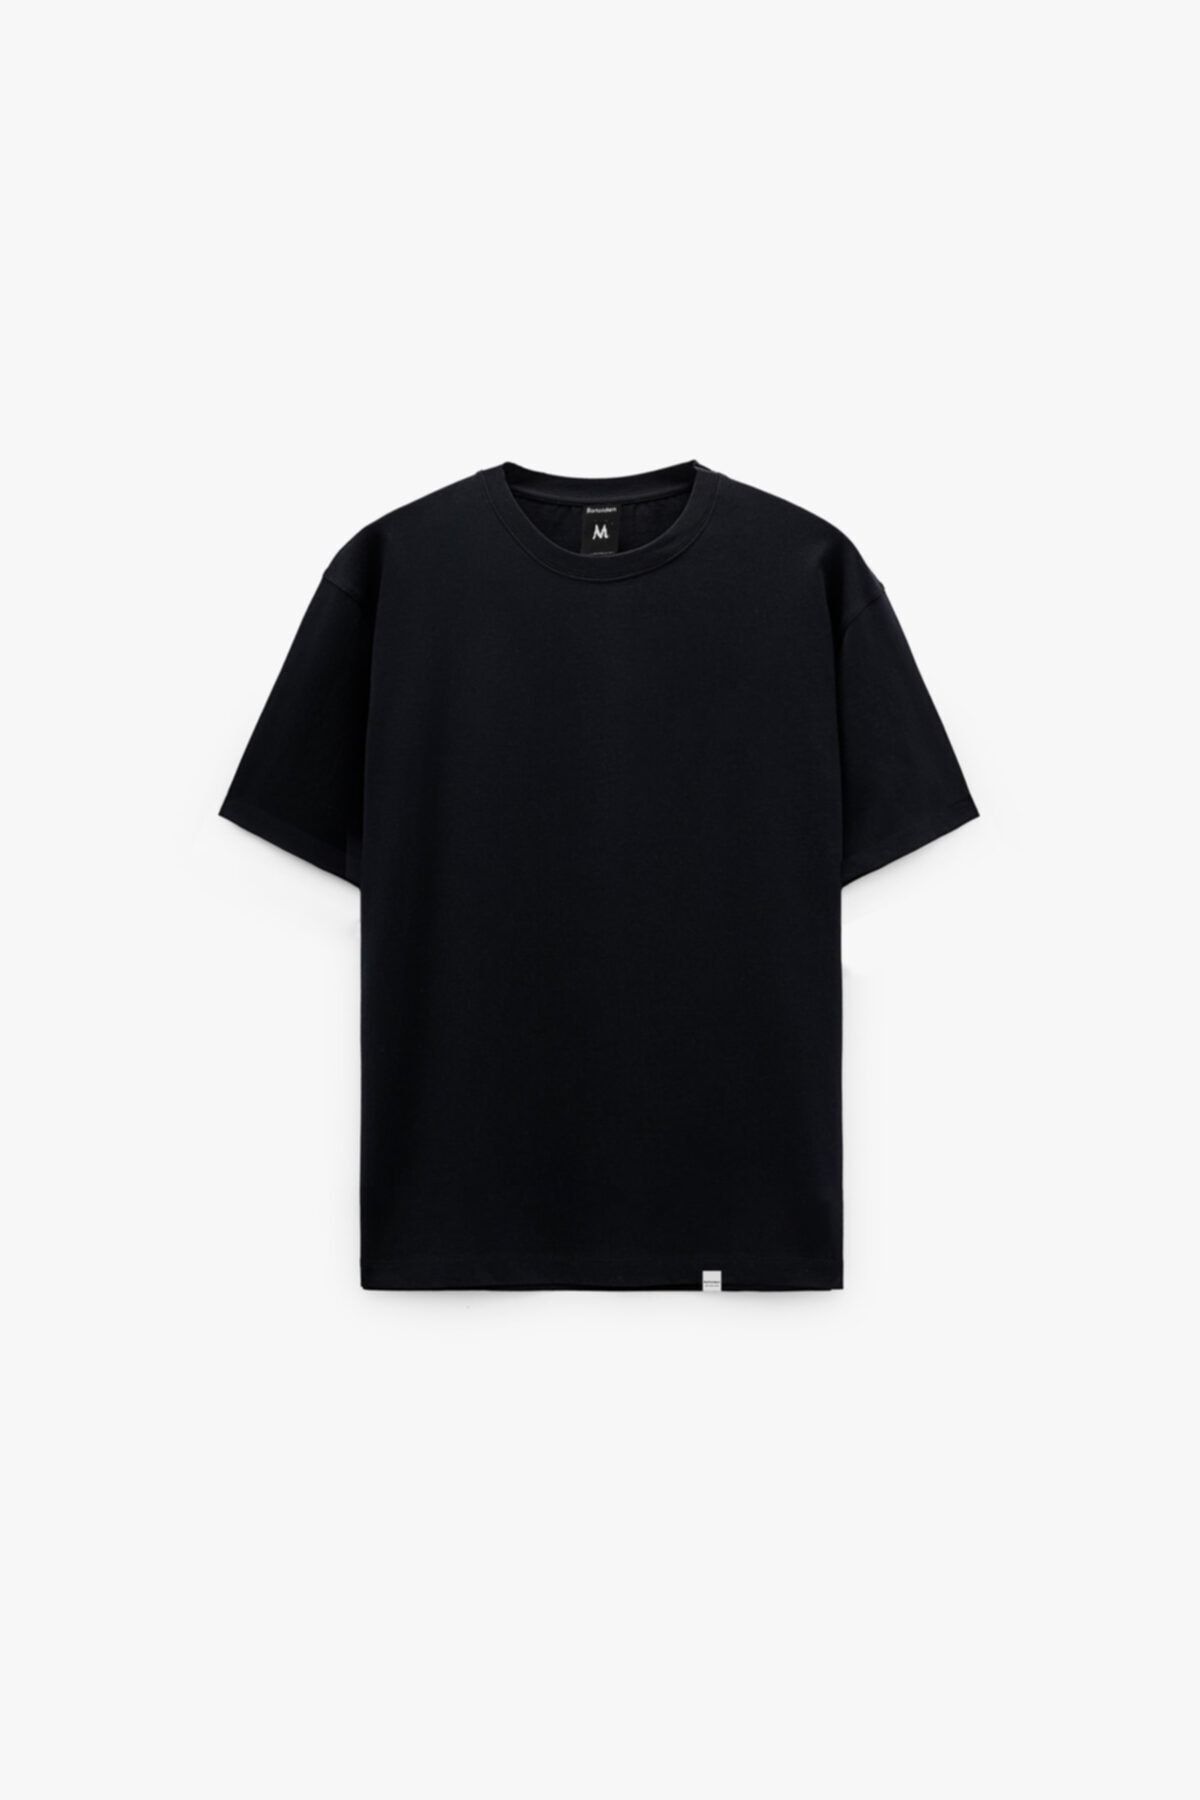 Rafolden Unisex Siyah Basic T-Shirt